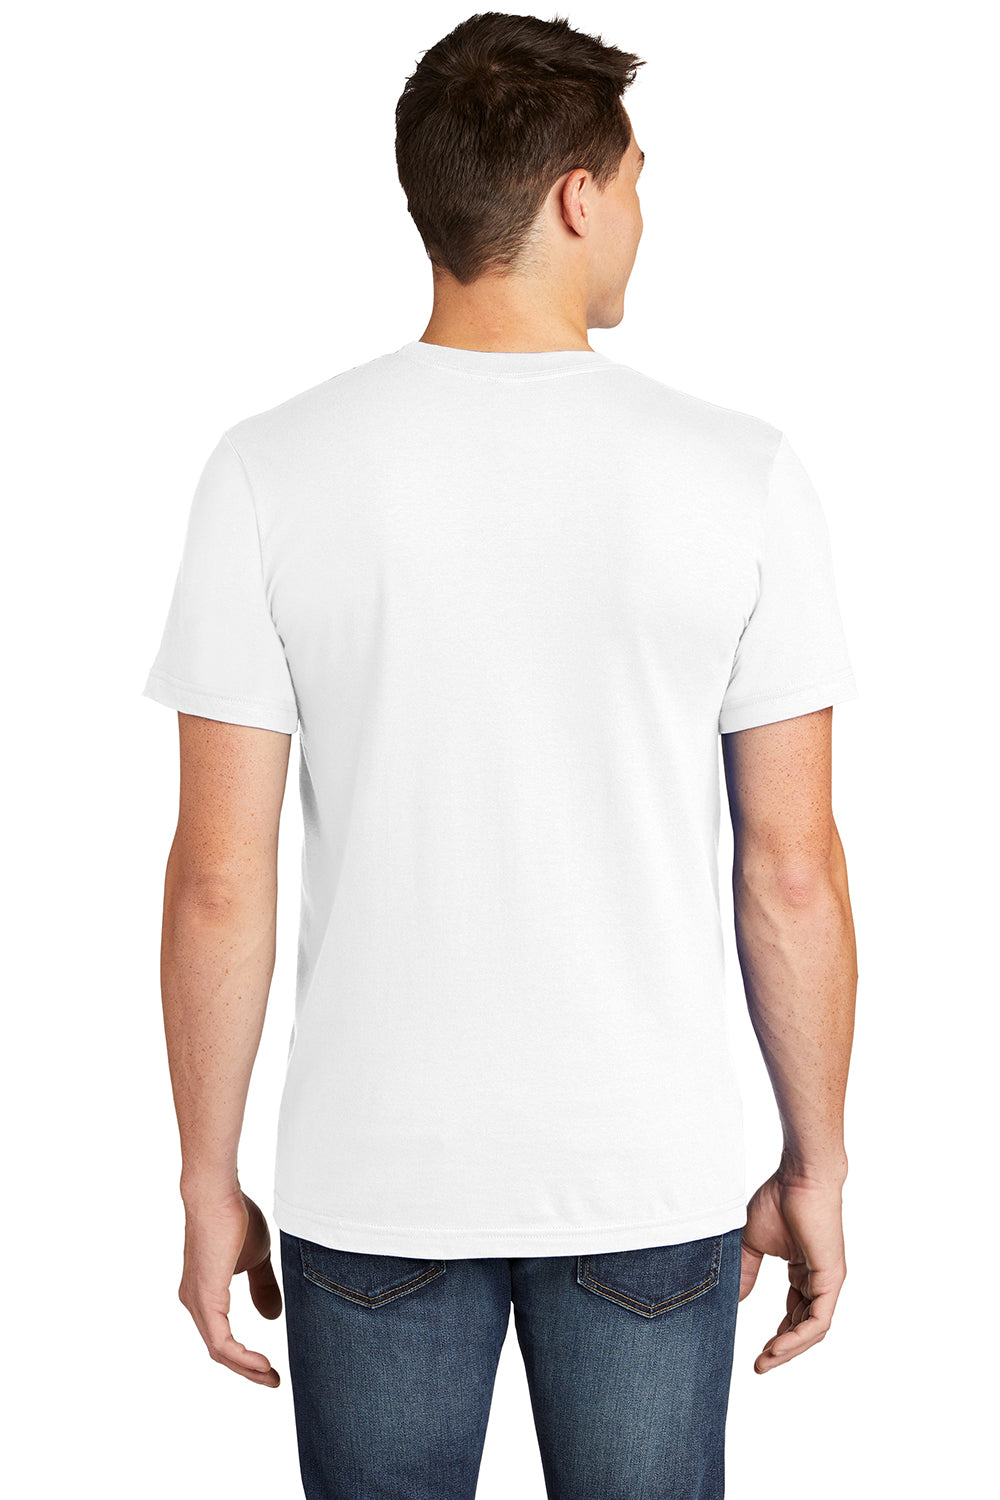 American Apparel 2001 Mens Fine Jersey Short Sleeve Crewneck T-Shirt White Model Back